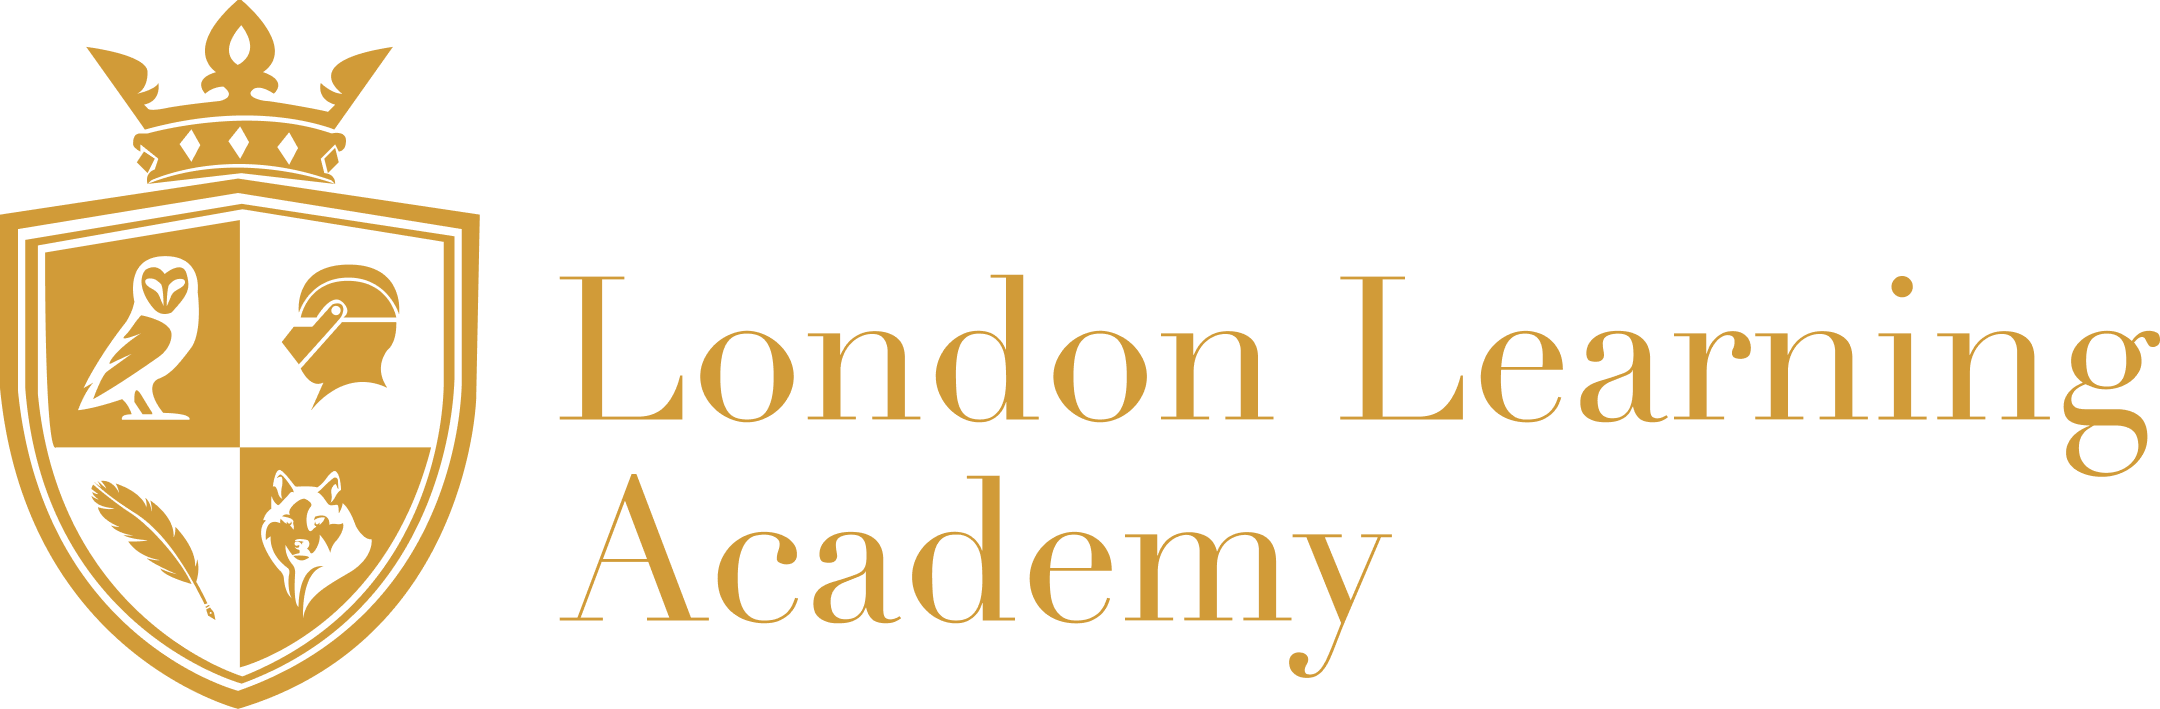 london learning academy